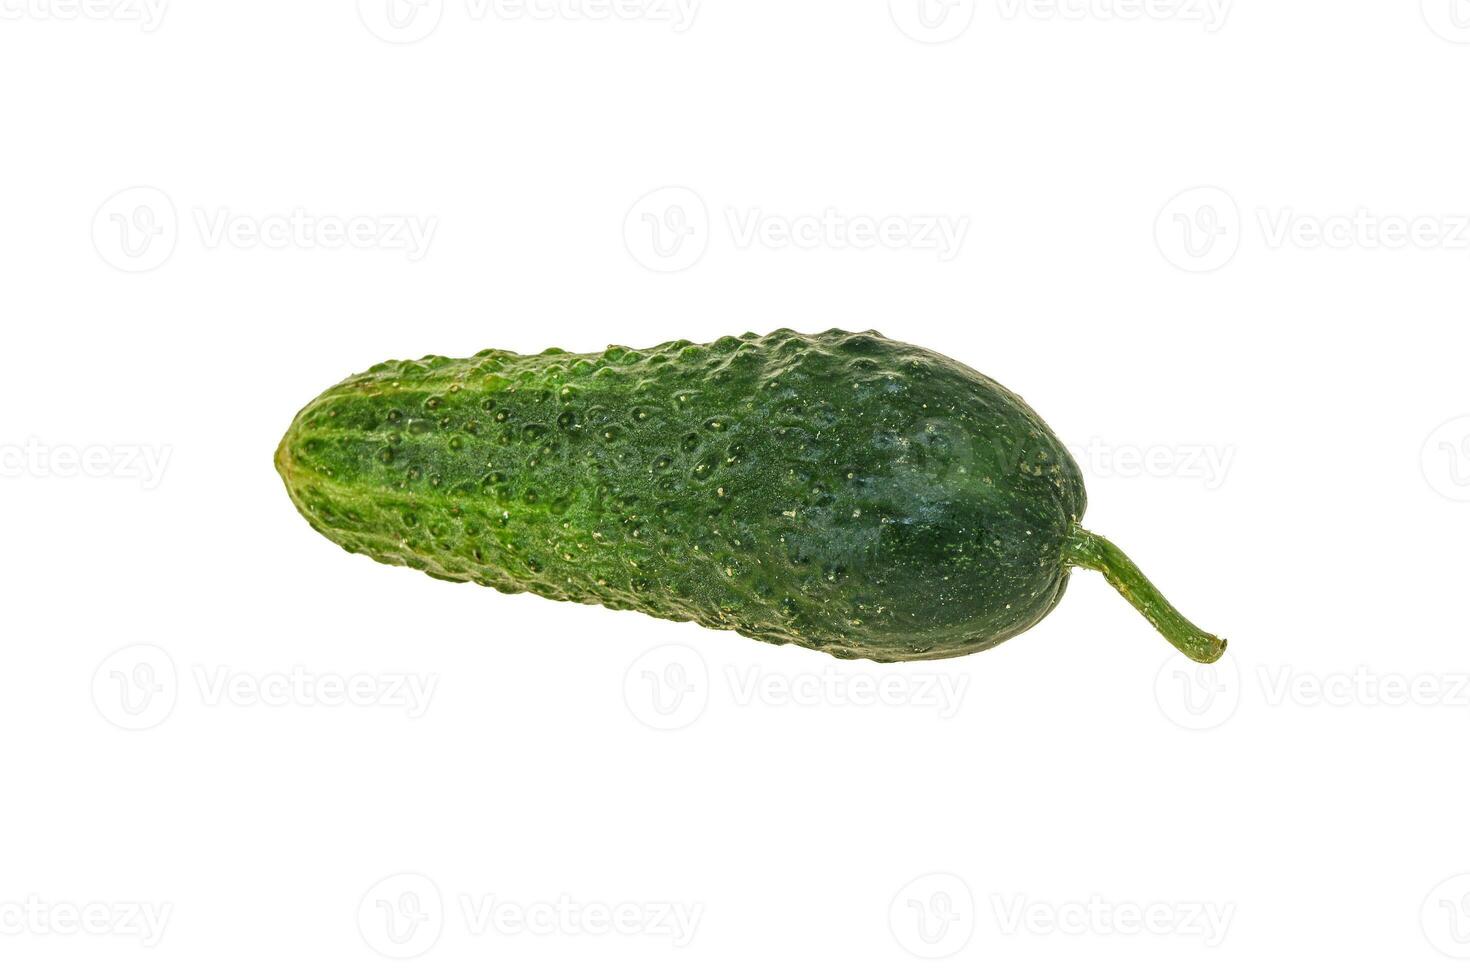 Green ripe fresh cucumber over background photo